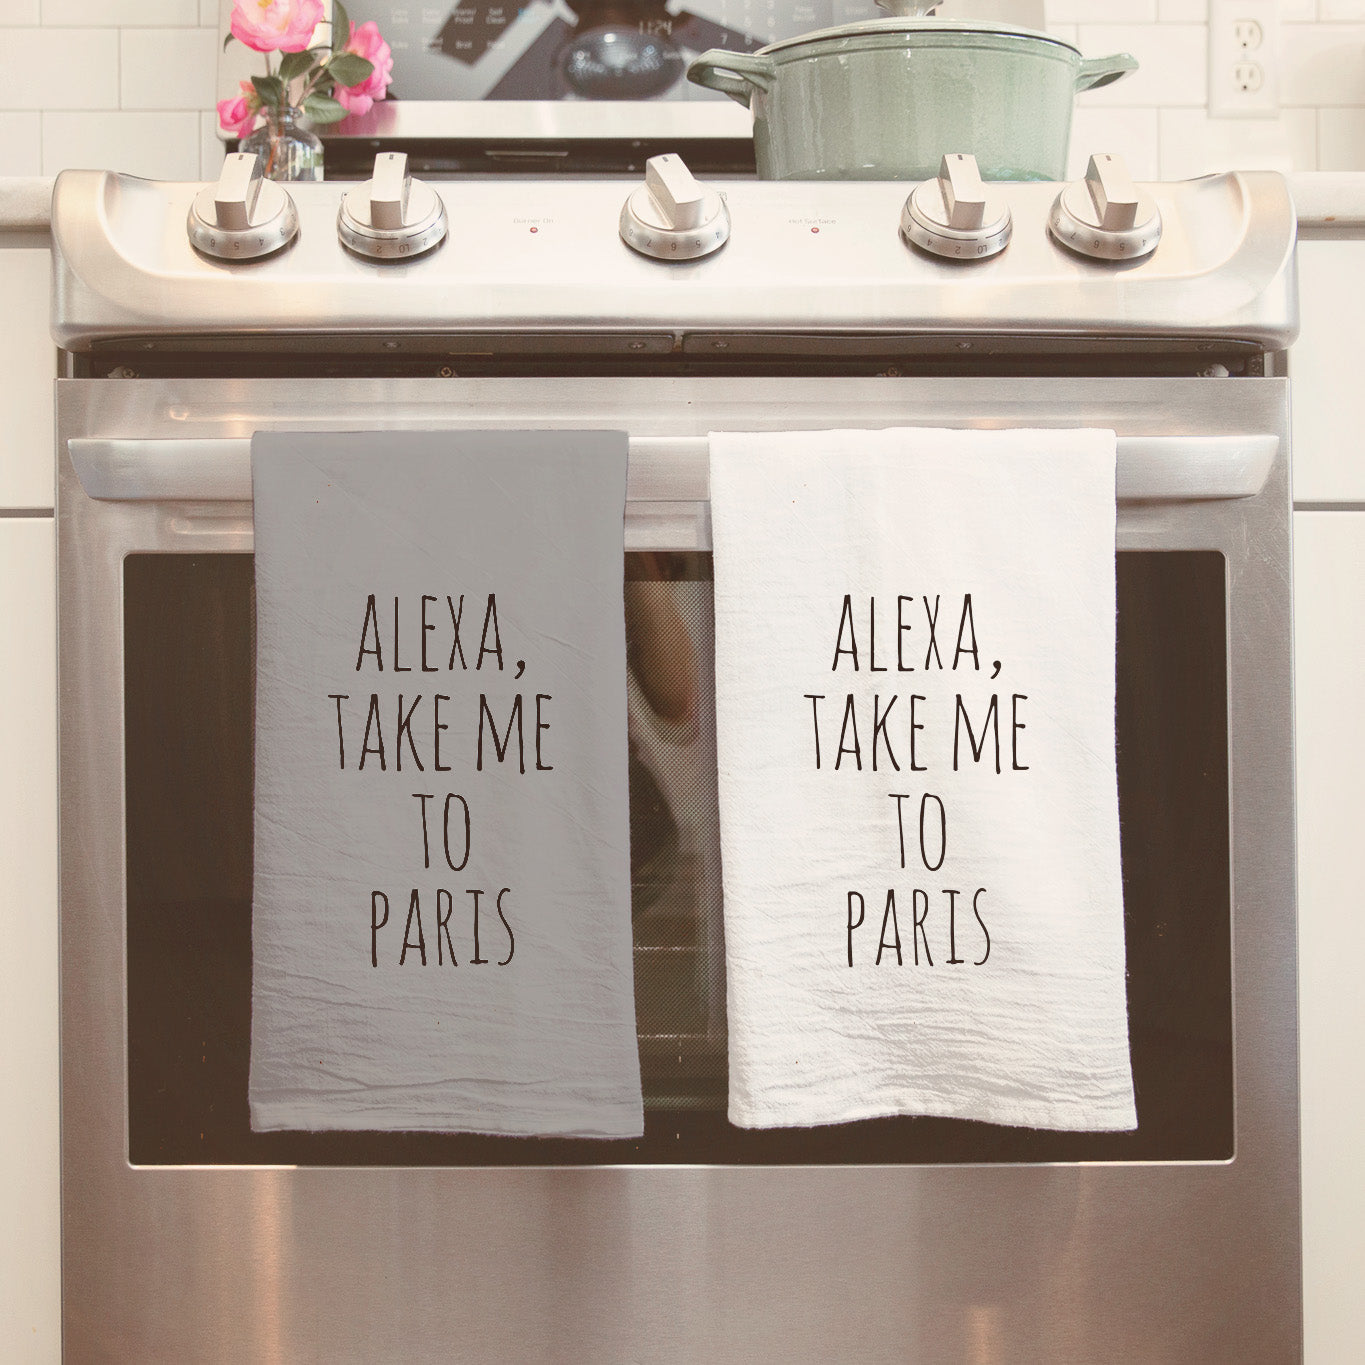 Alexa Take Me to Paris Tea Towels in nice kitchen on stove both white and gray